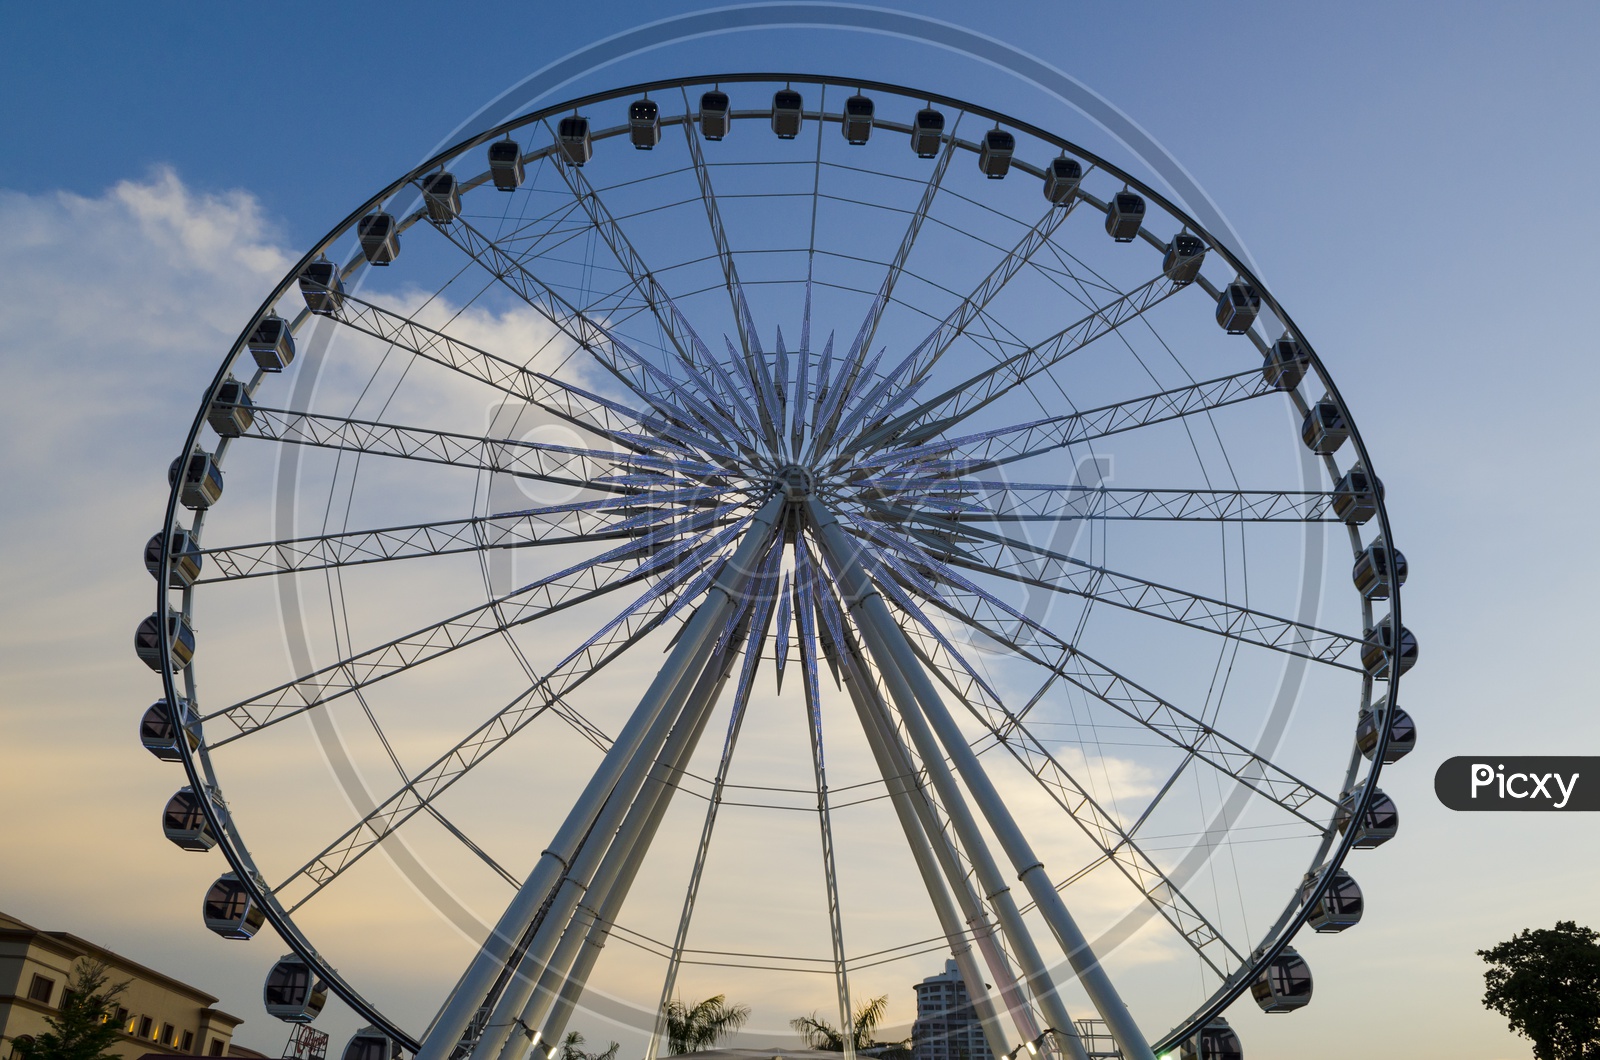 Beautiful large Ferris wheel With Sunset  Sky Background